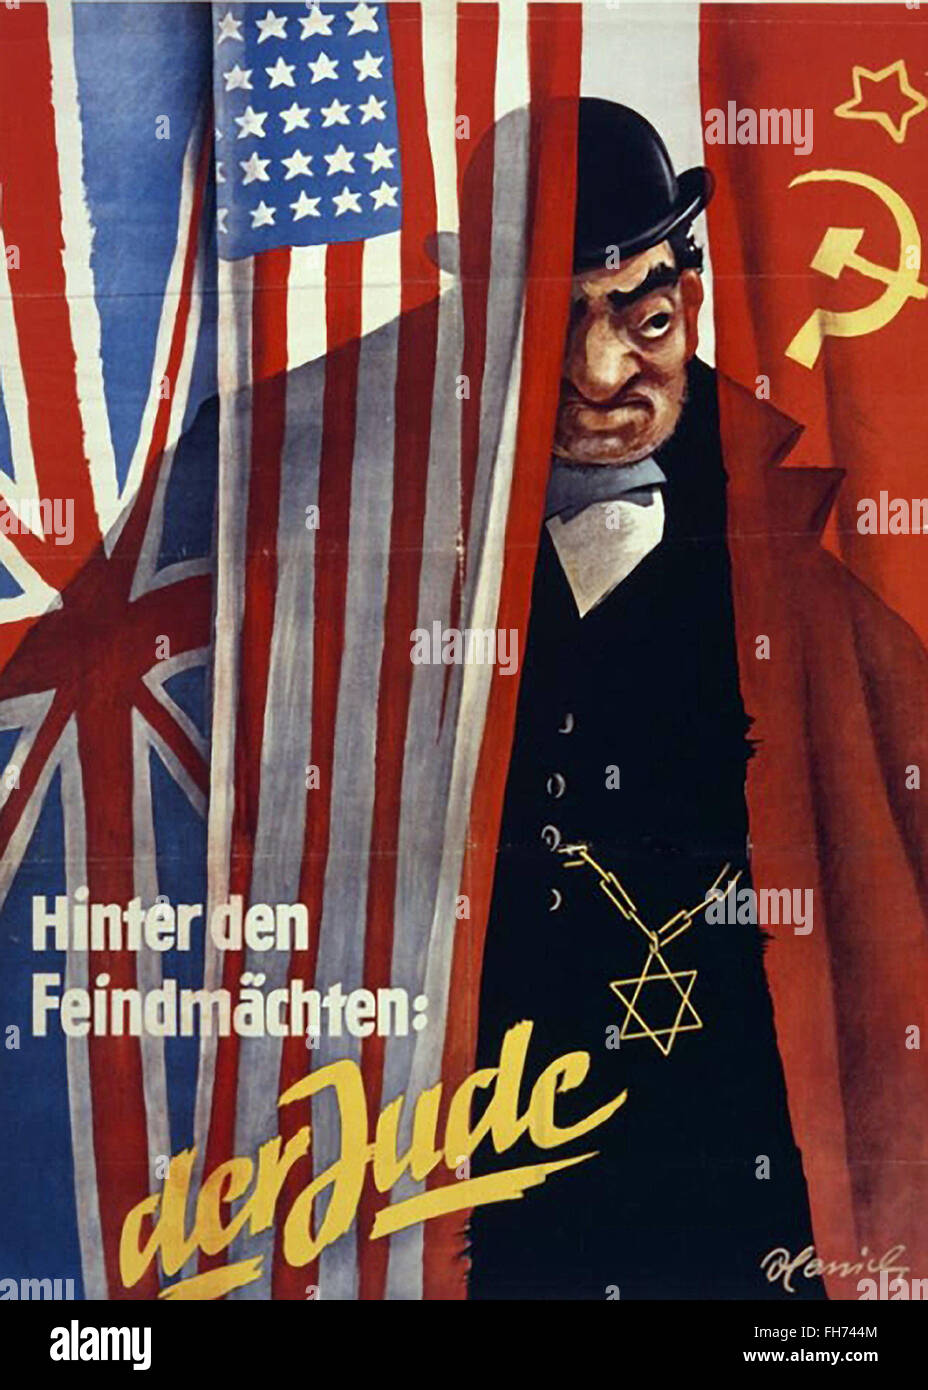 der jude - German Nazi Propaganda Poster - WWII Stock Photo